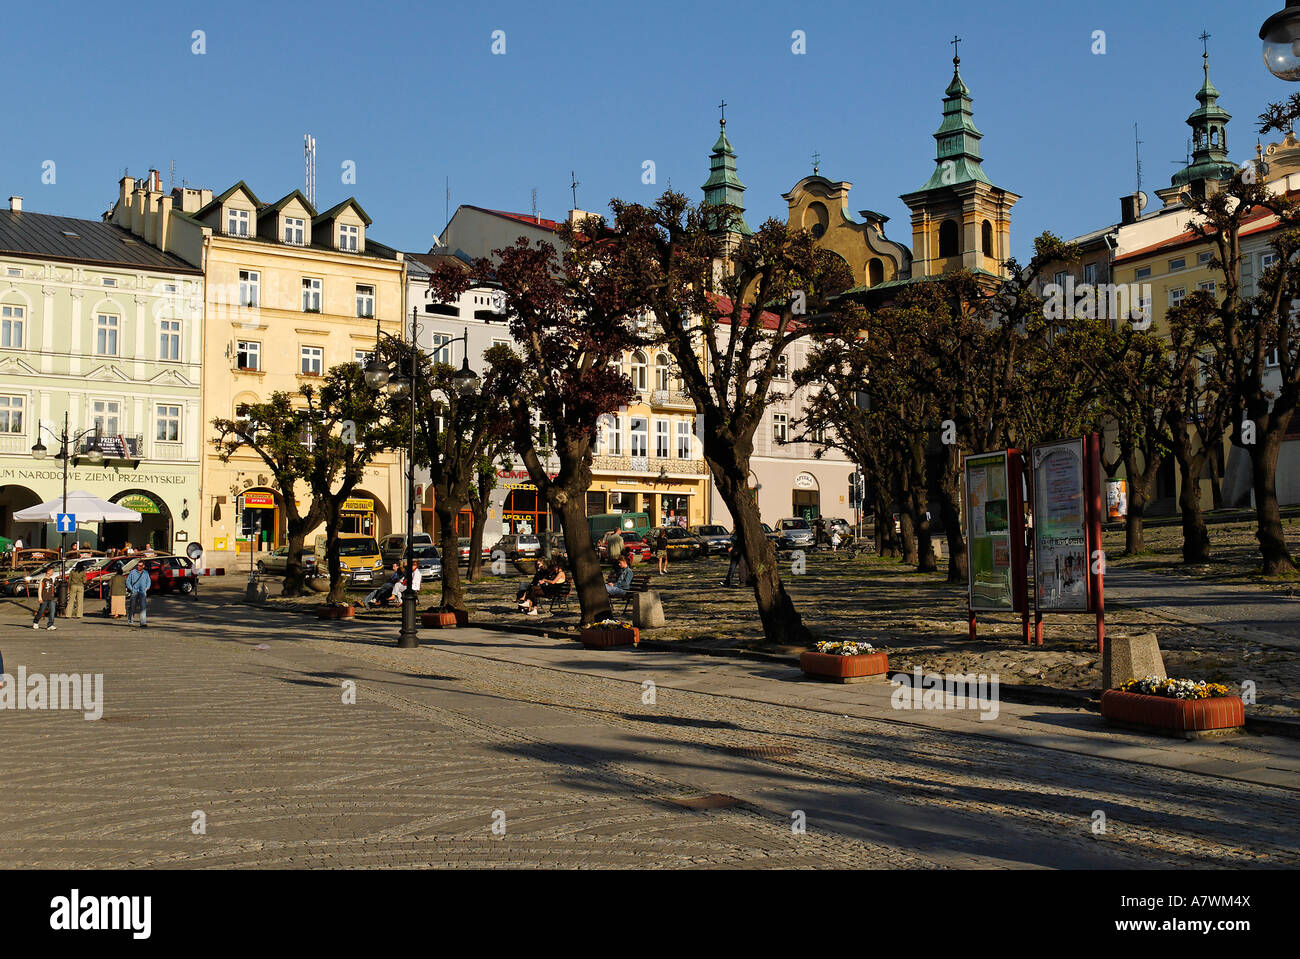 Historic old town of Przemysl, city square, Poland Stock Photo